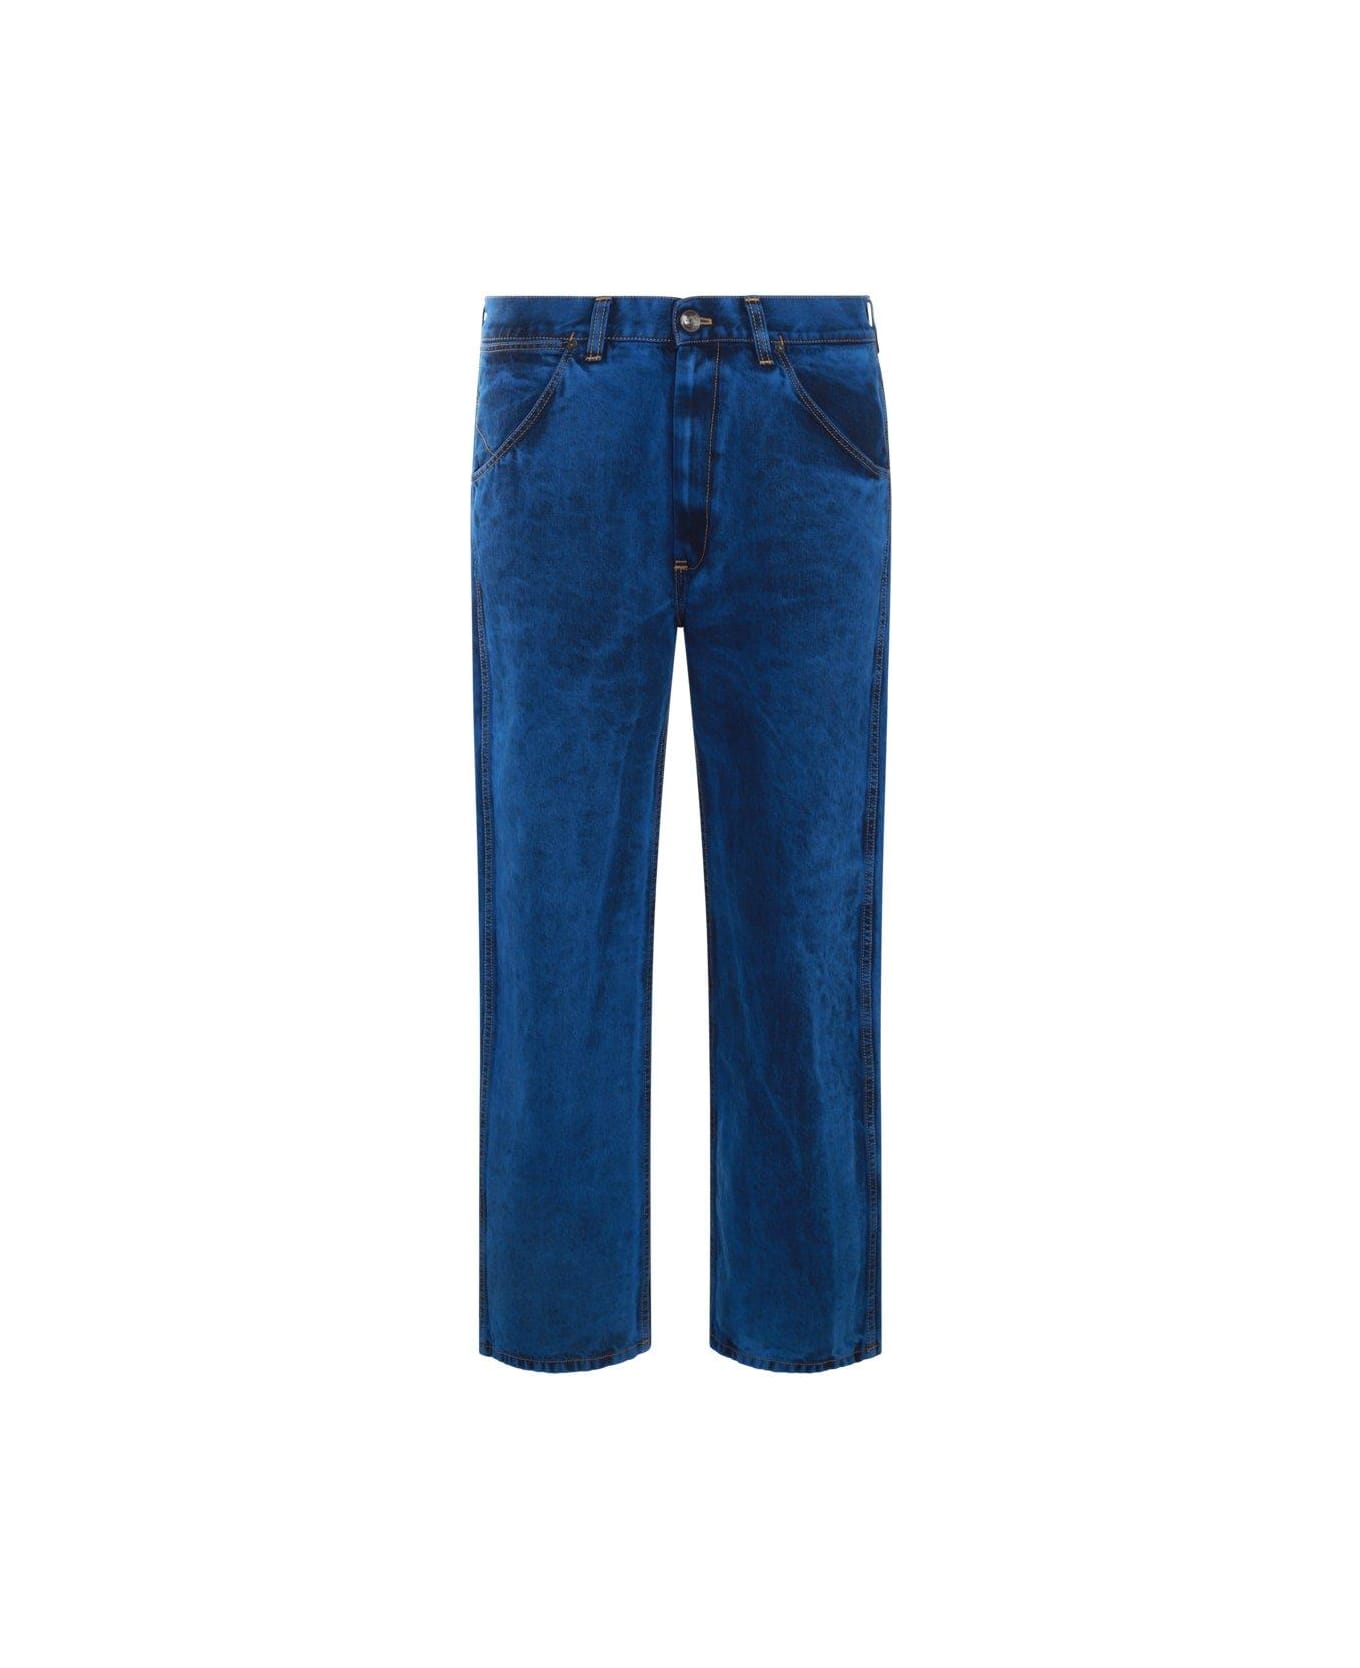 Vivienne Westwood Ranch Acid Wash Denim Jeans - BLUE